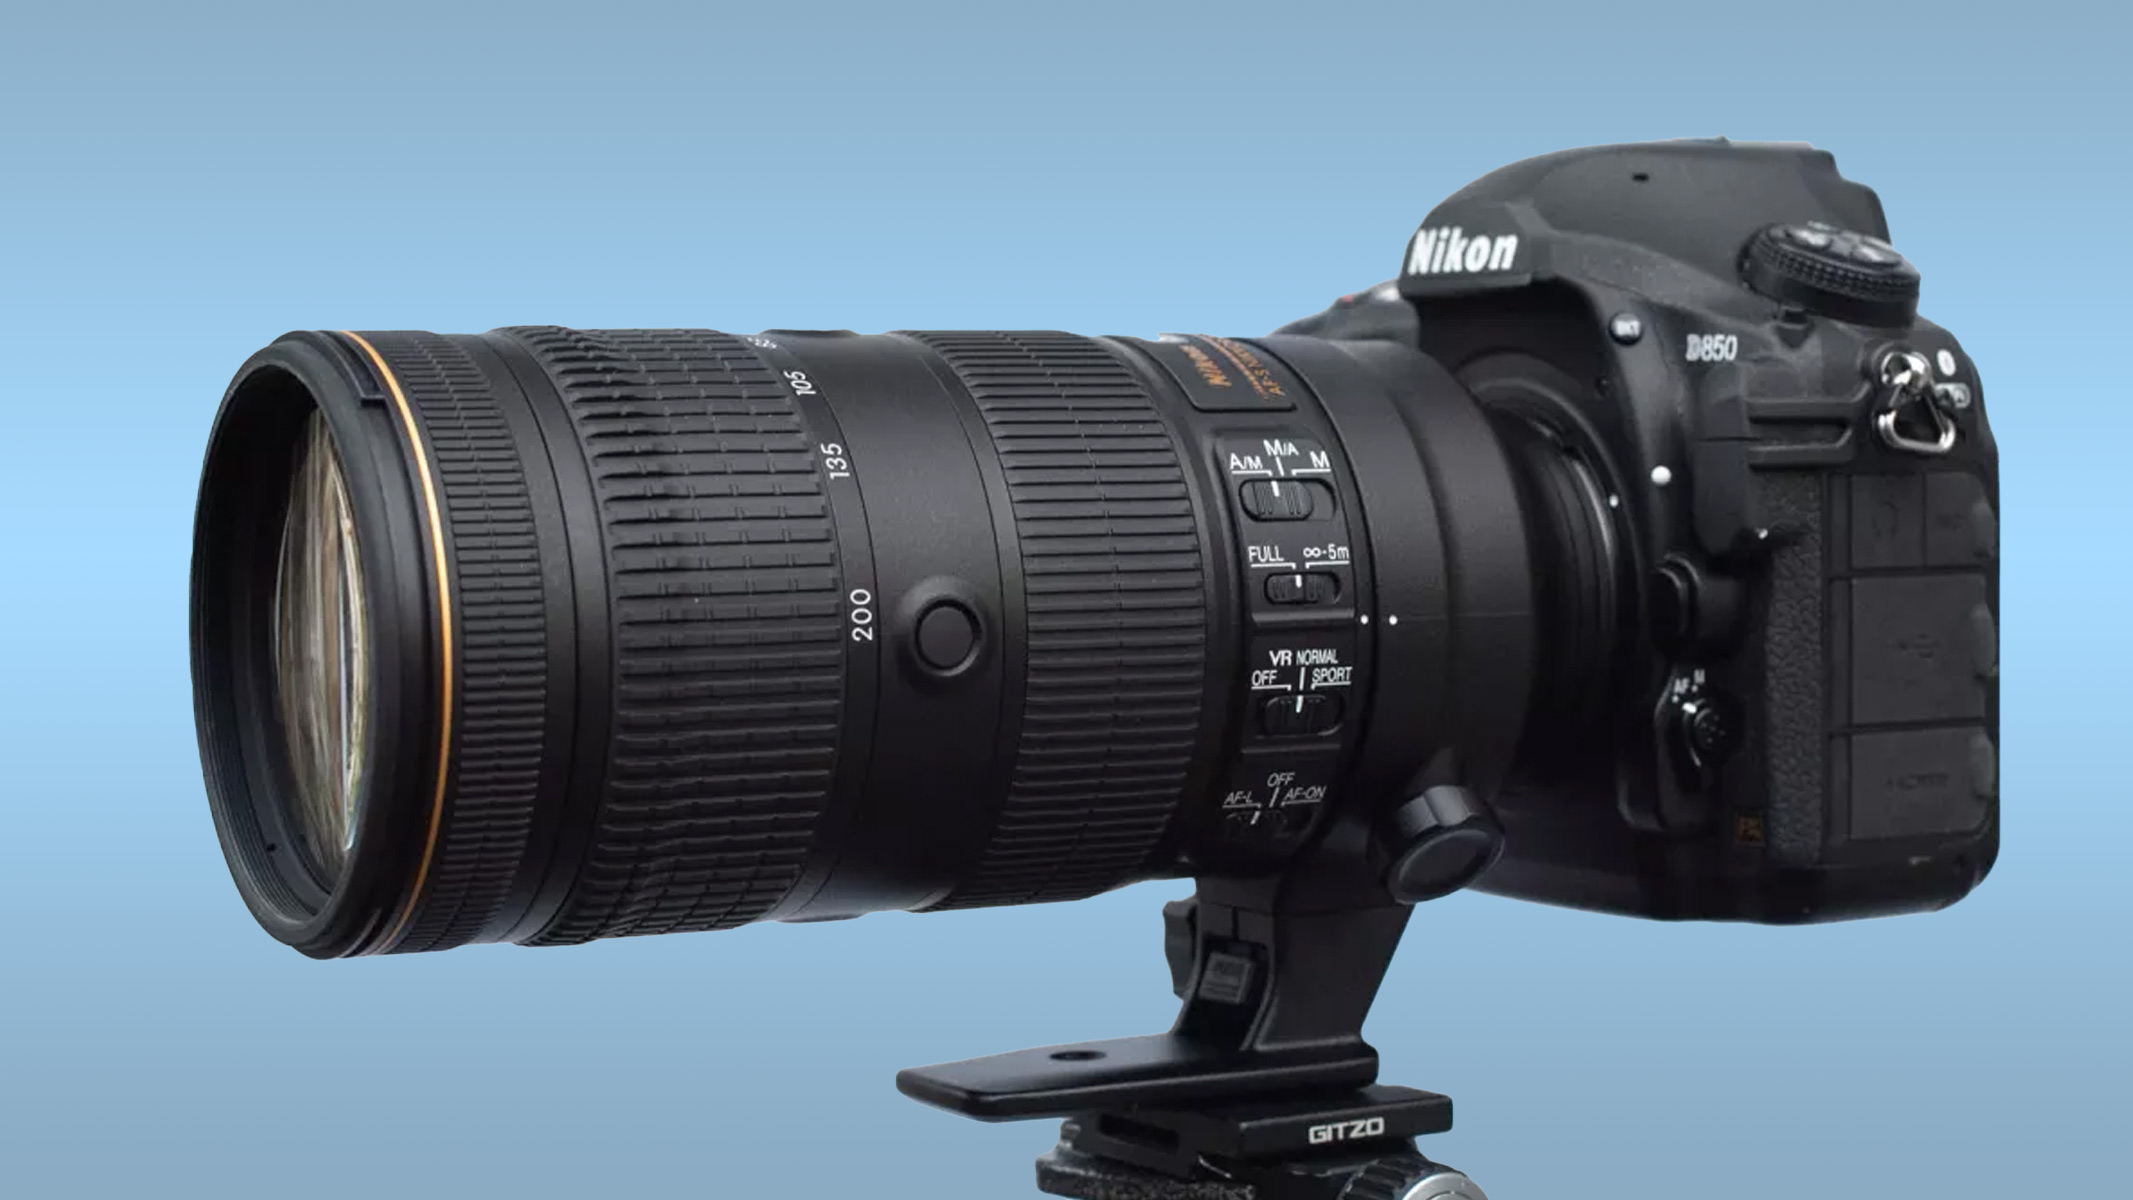 Nikon 70-200mm f/2.8 FL ED VR lens on a tripod